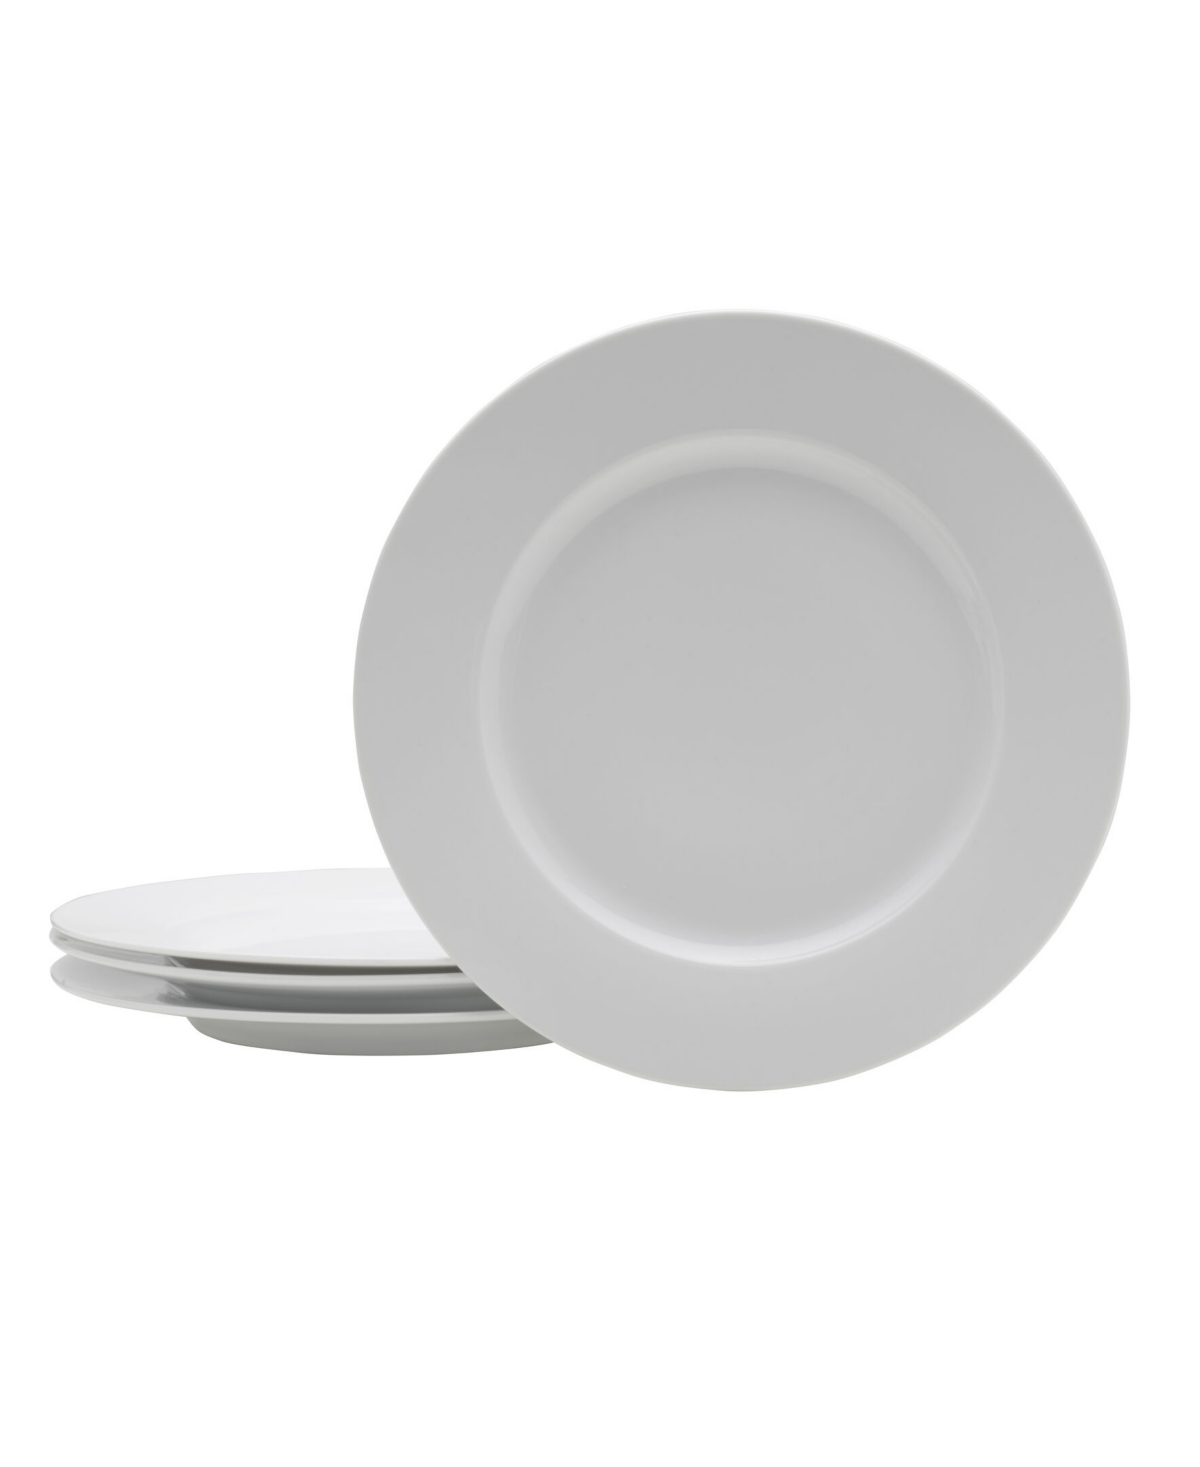 Everyday Whiteware Classic Rim Dinner Plate 4 Piece Set - White